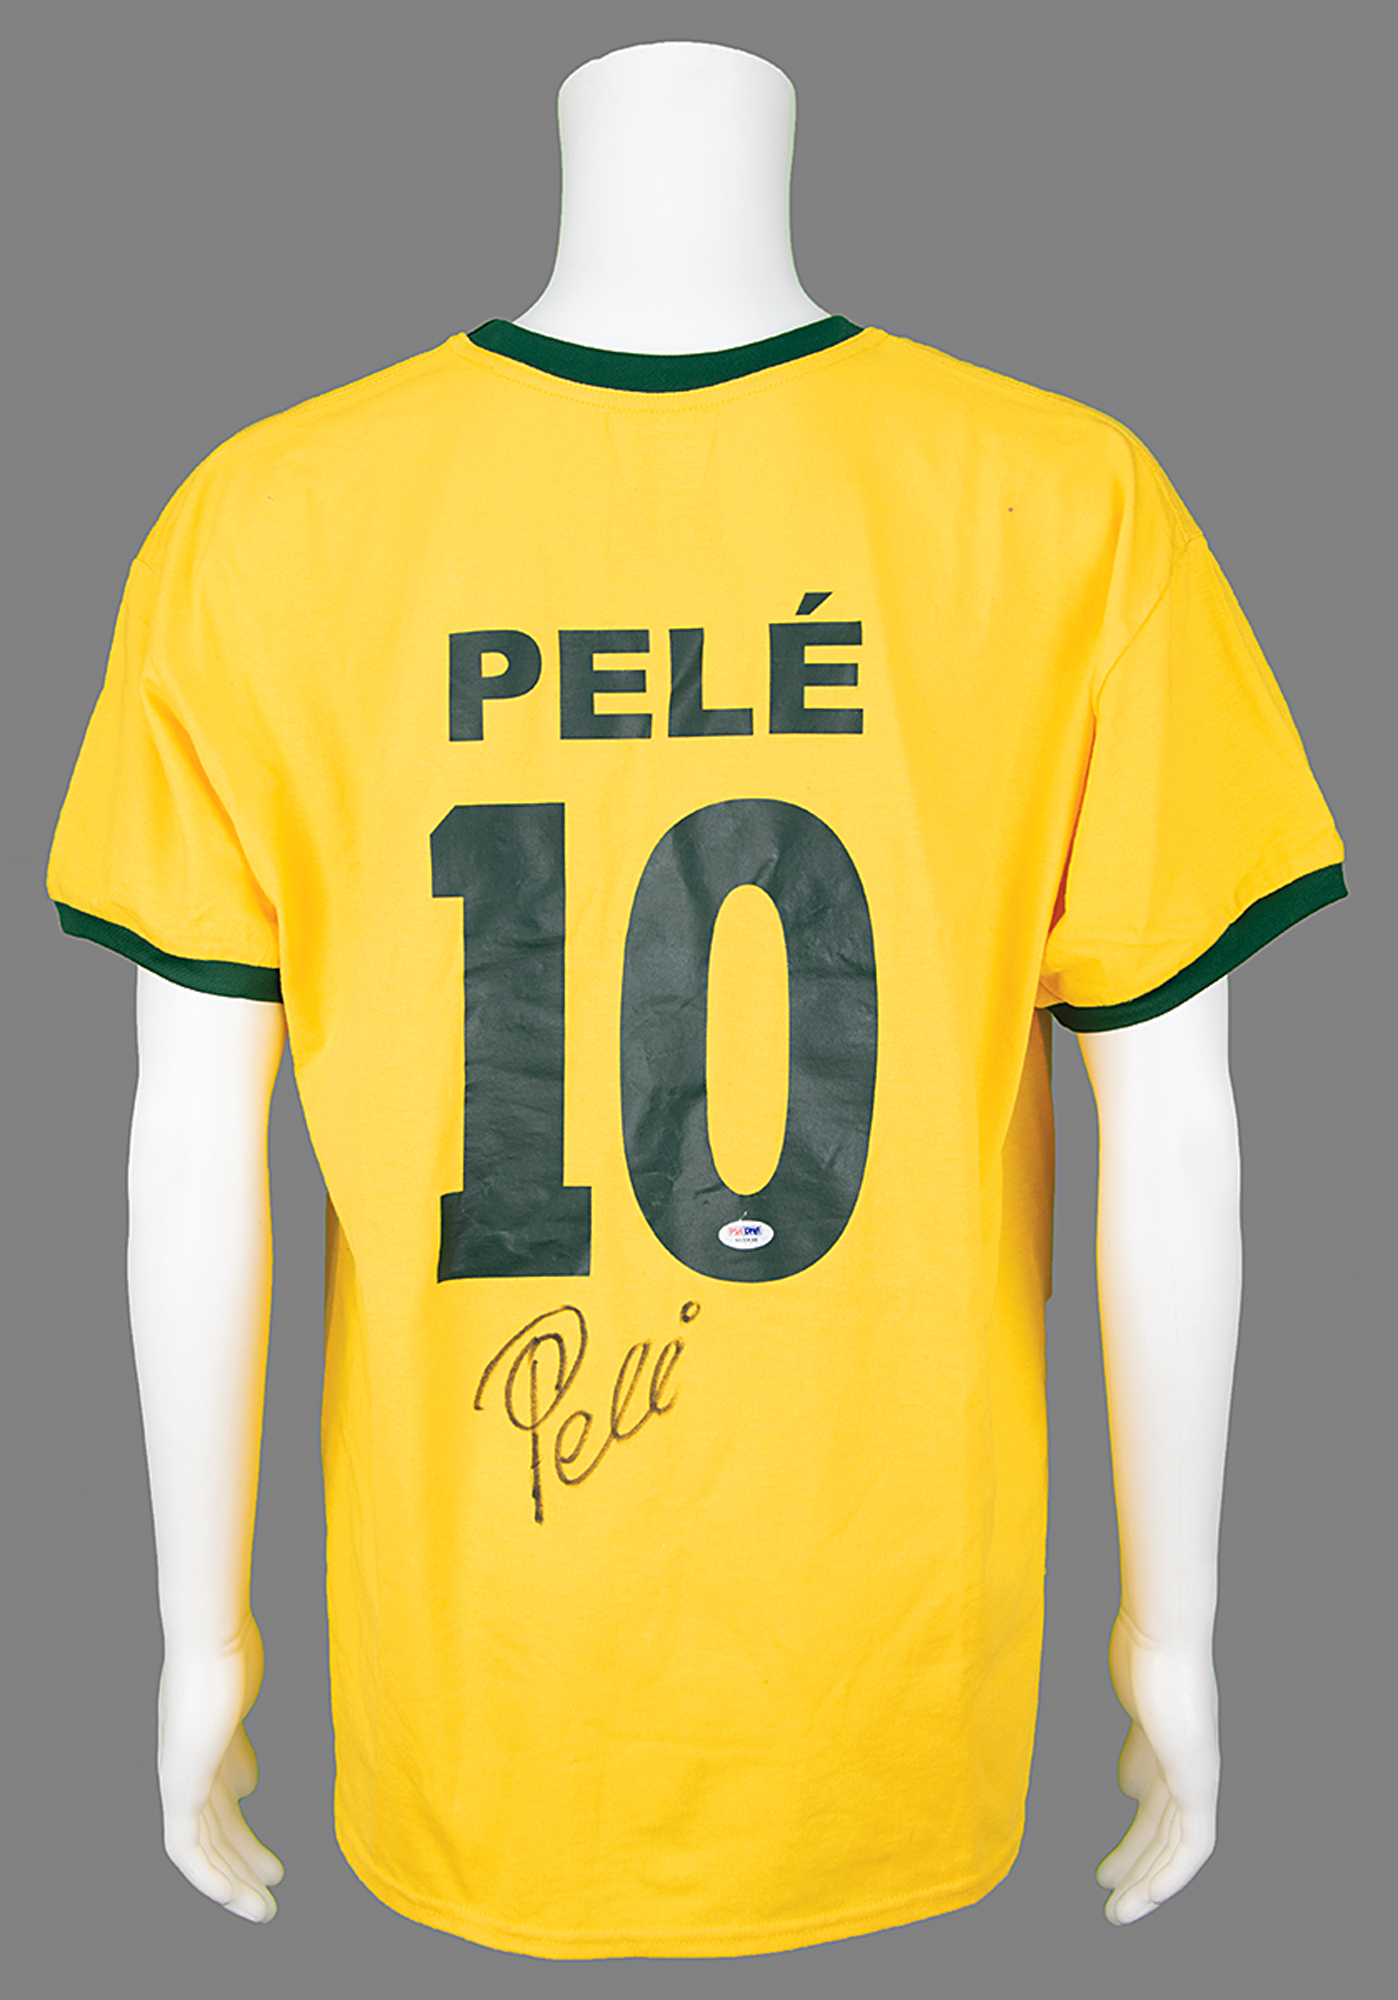 Lot #816 Pele Signed Soccer Jersey